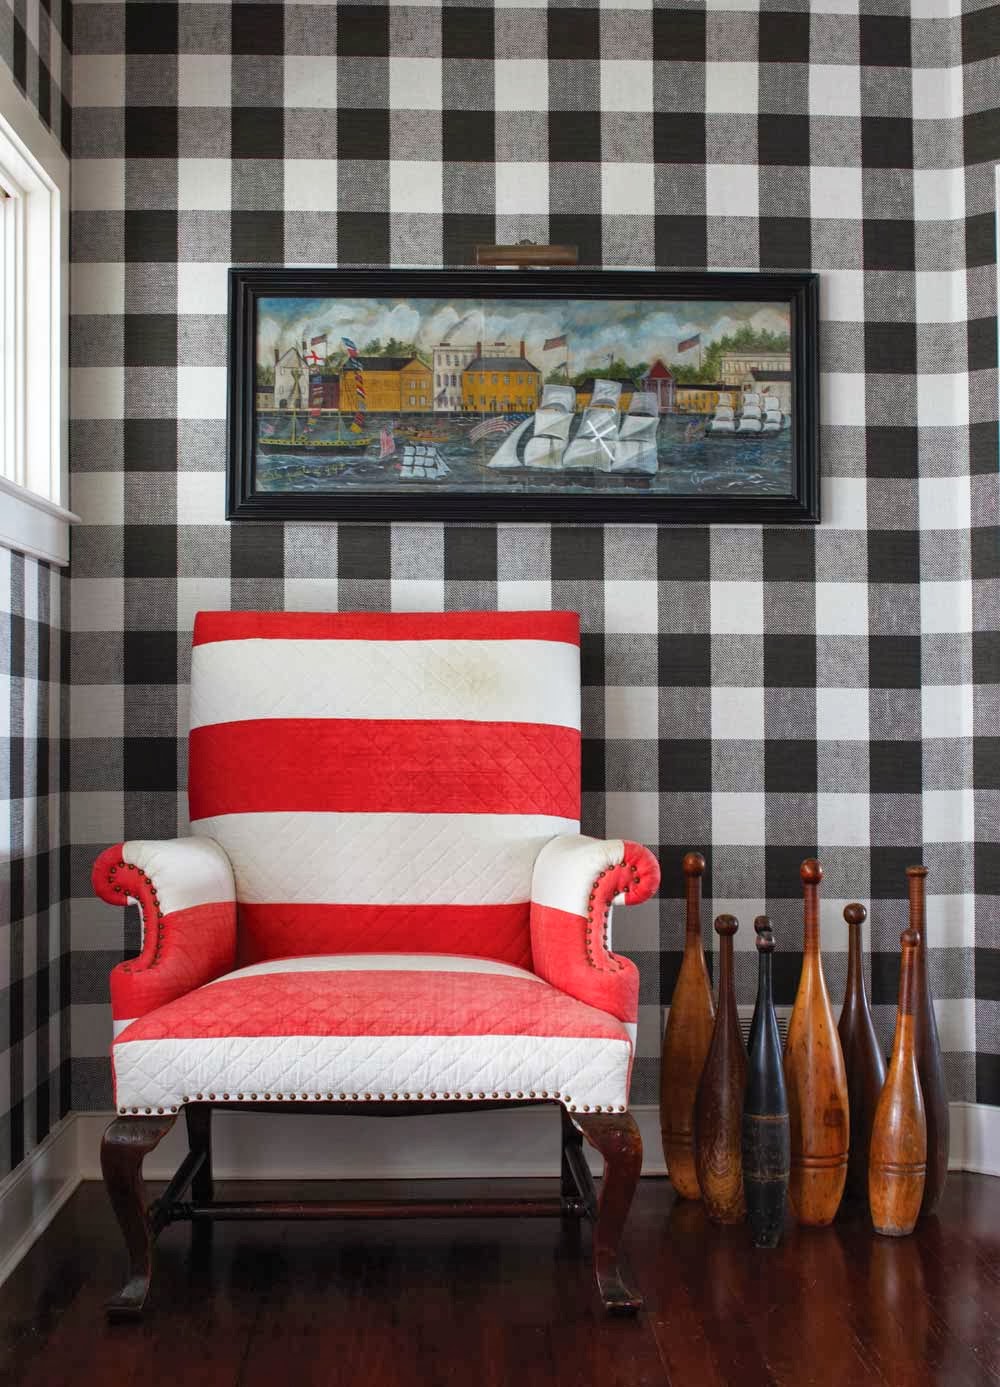 Gingham Black White Wall Covering Wallpaper Upholstered Red